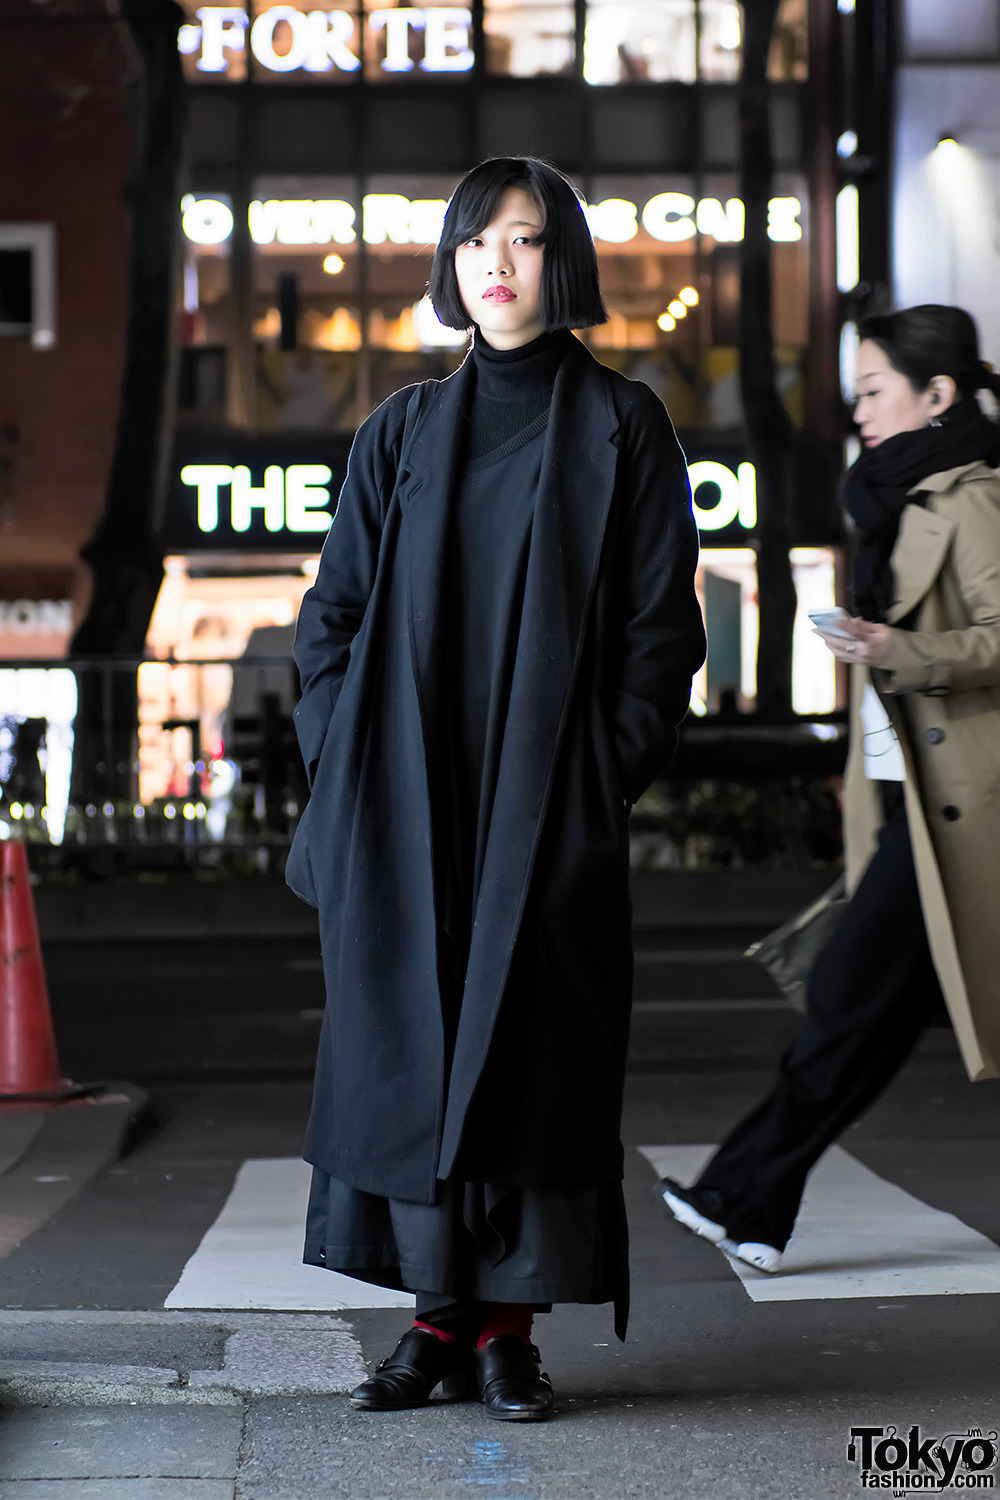 tokyo-fashion: 19-year-old Moeno on the street in Harajuku wearing a dark look including